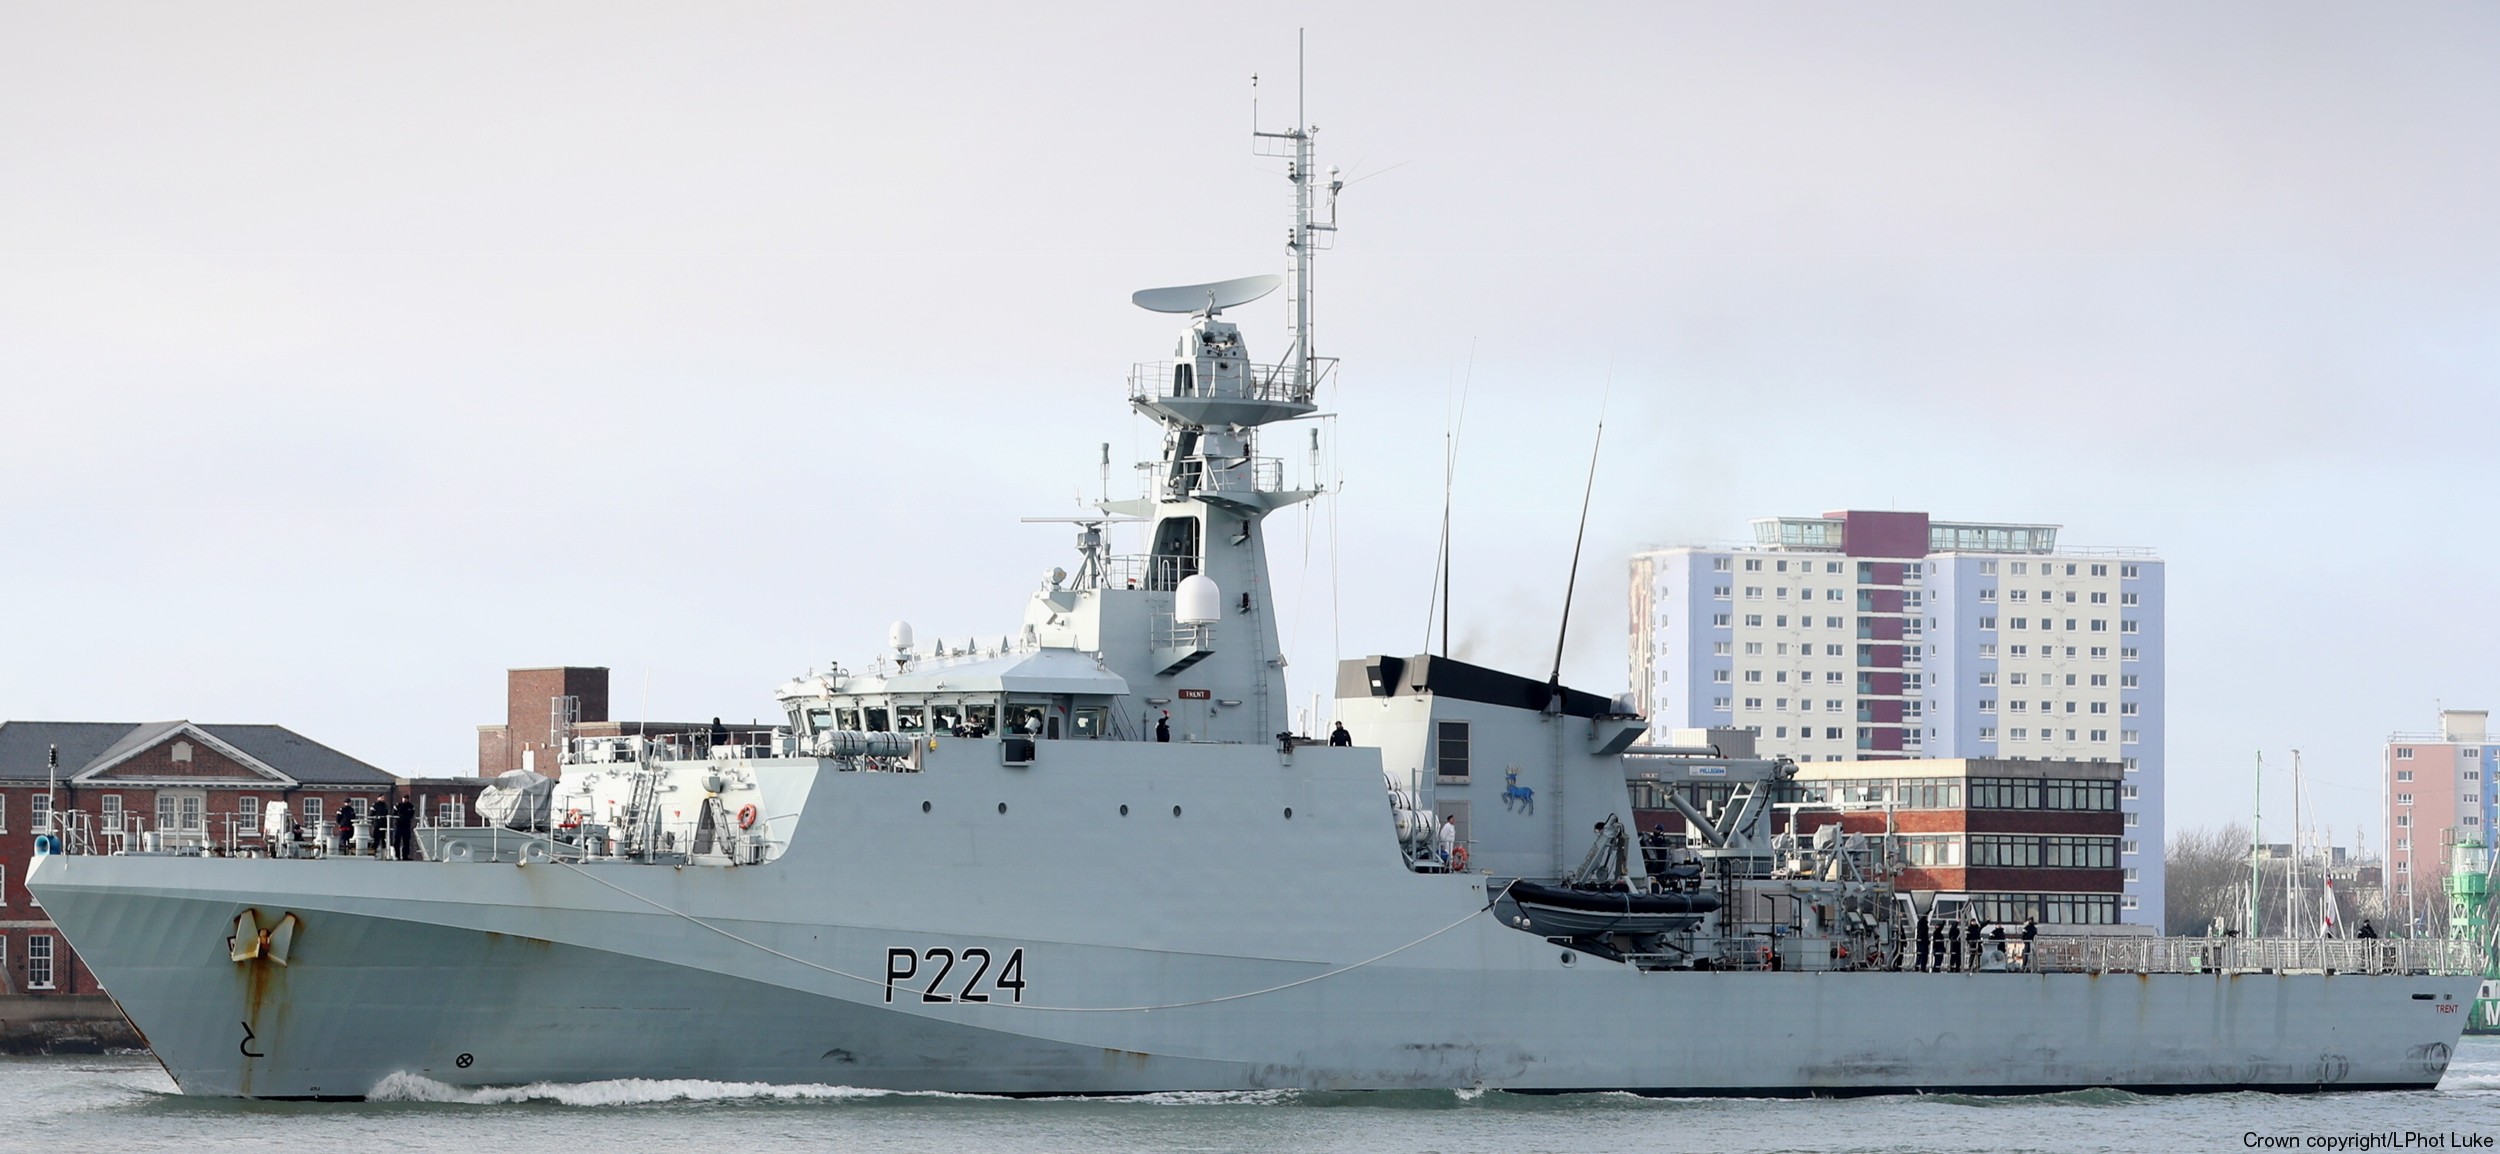 p224 hms trent river class offshore patrol vessel opv royal navy 42